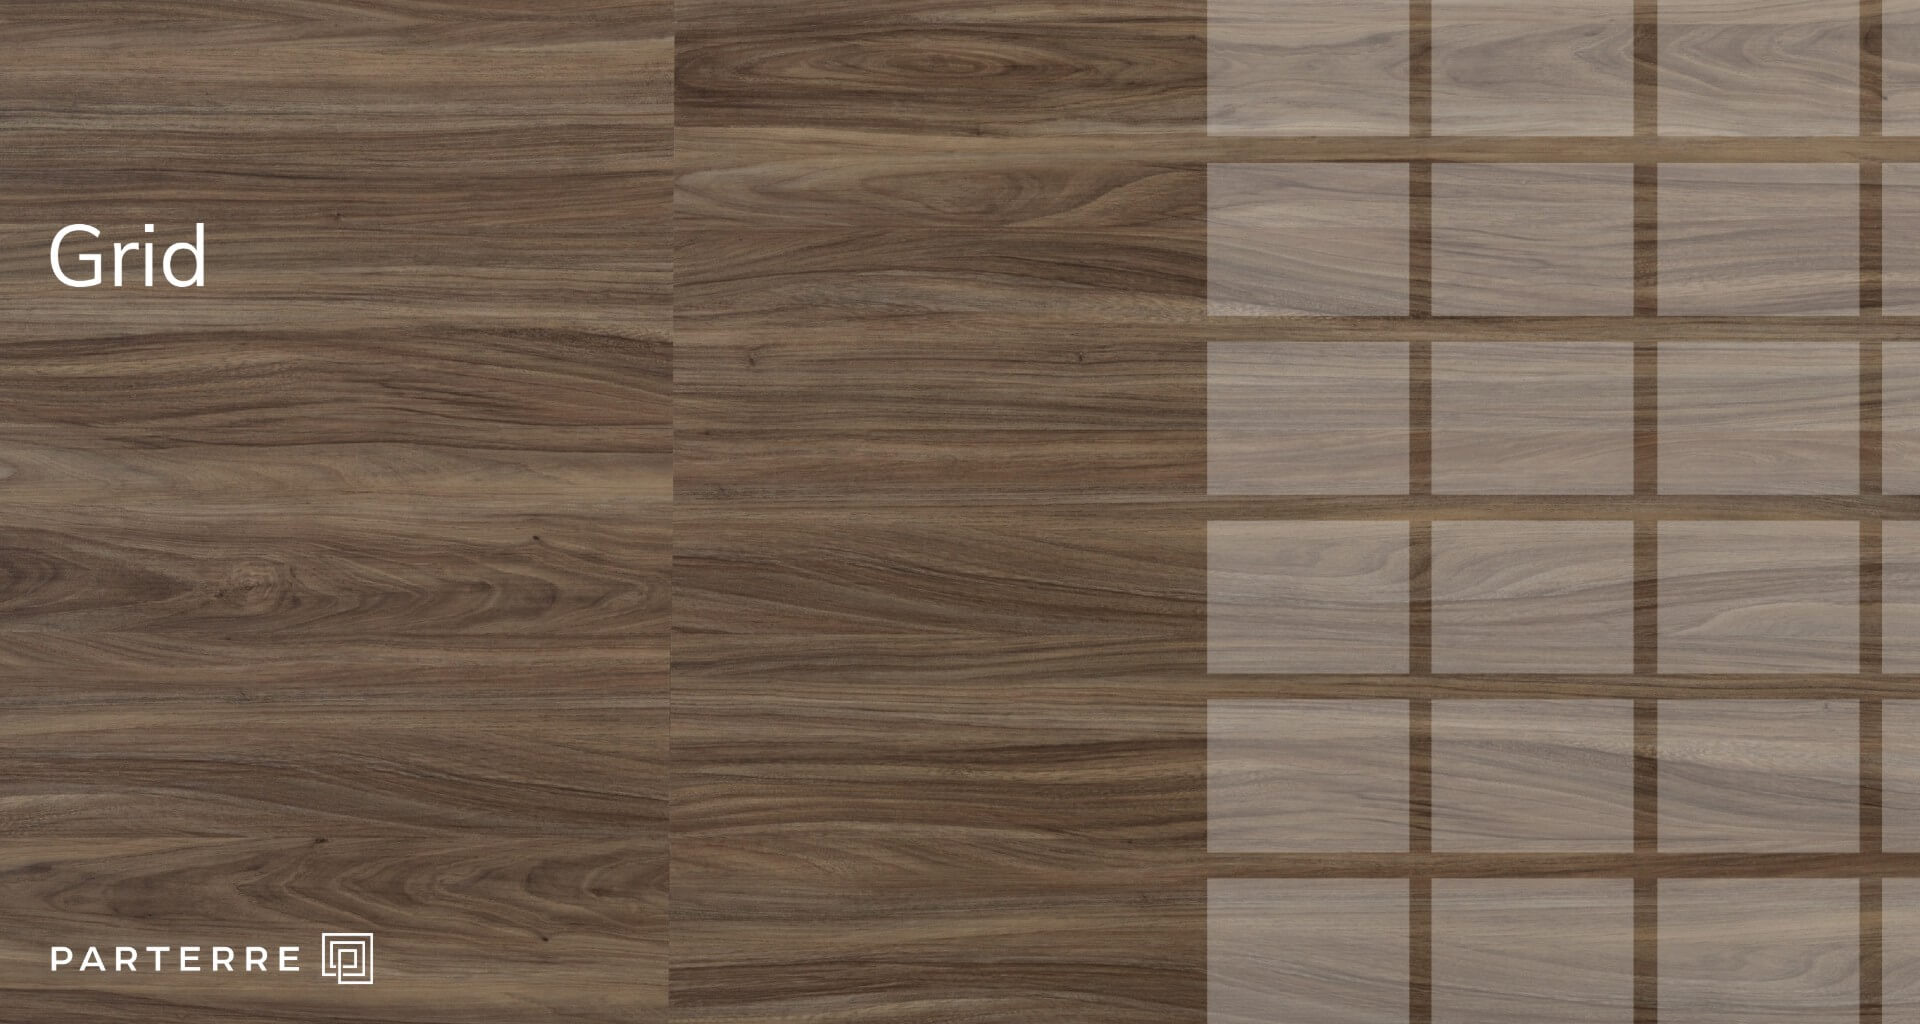 9 Vinyl Flooring Patterns For Your Next, Hardwood Flooring Design Layout